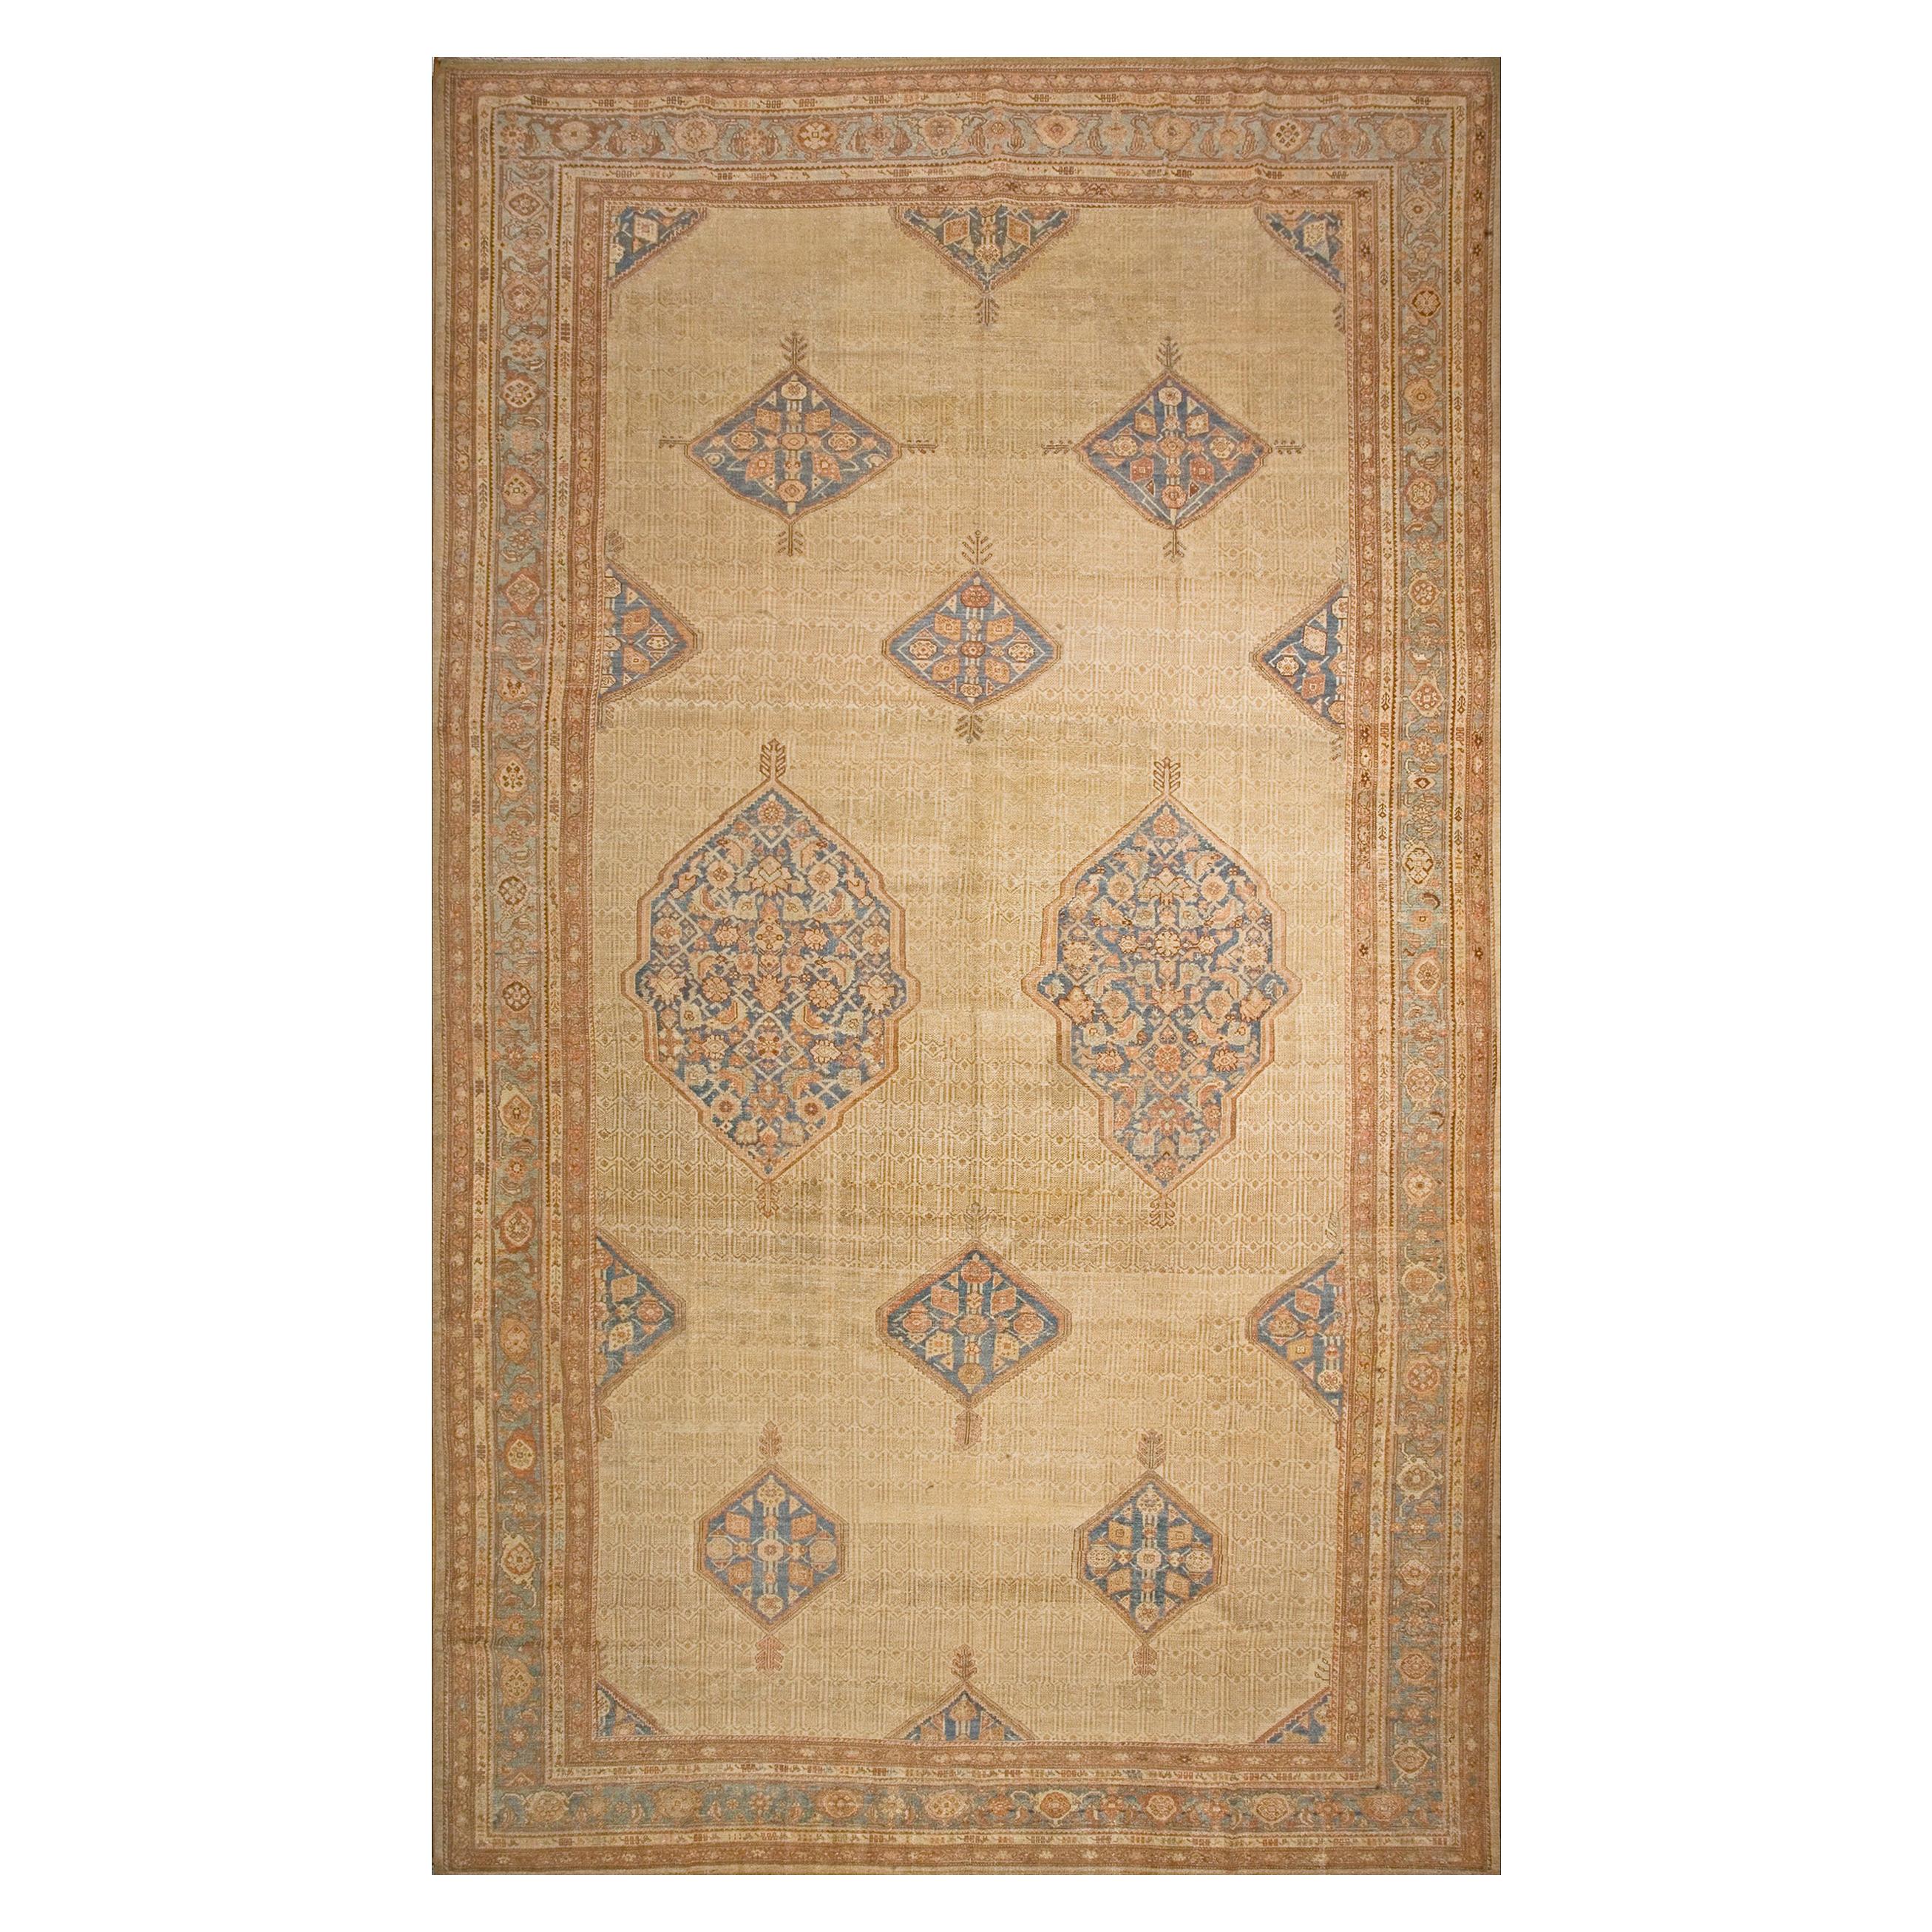 Late 19th Century Persian Serab Carpet ( 11'6" x 18'9" - 351 x 572 )